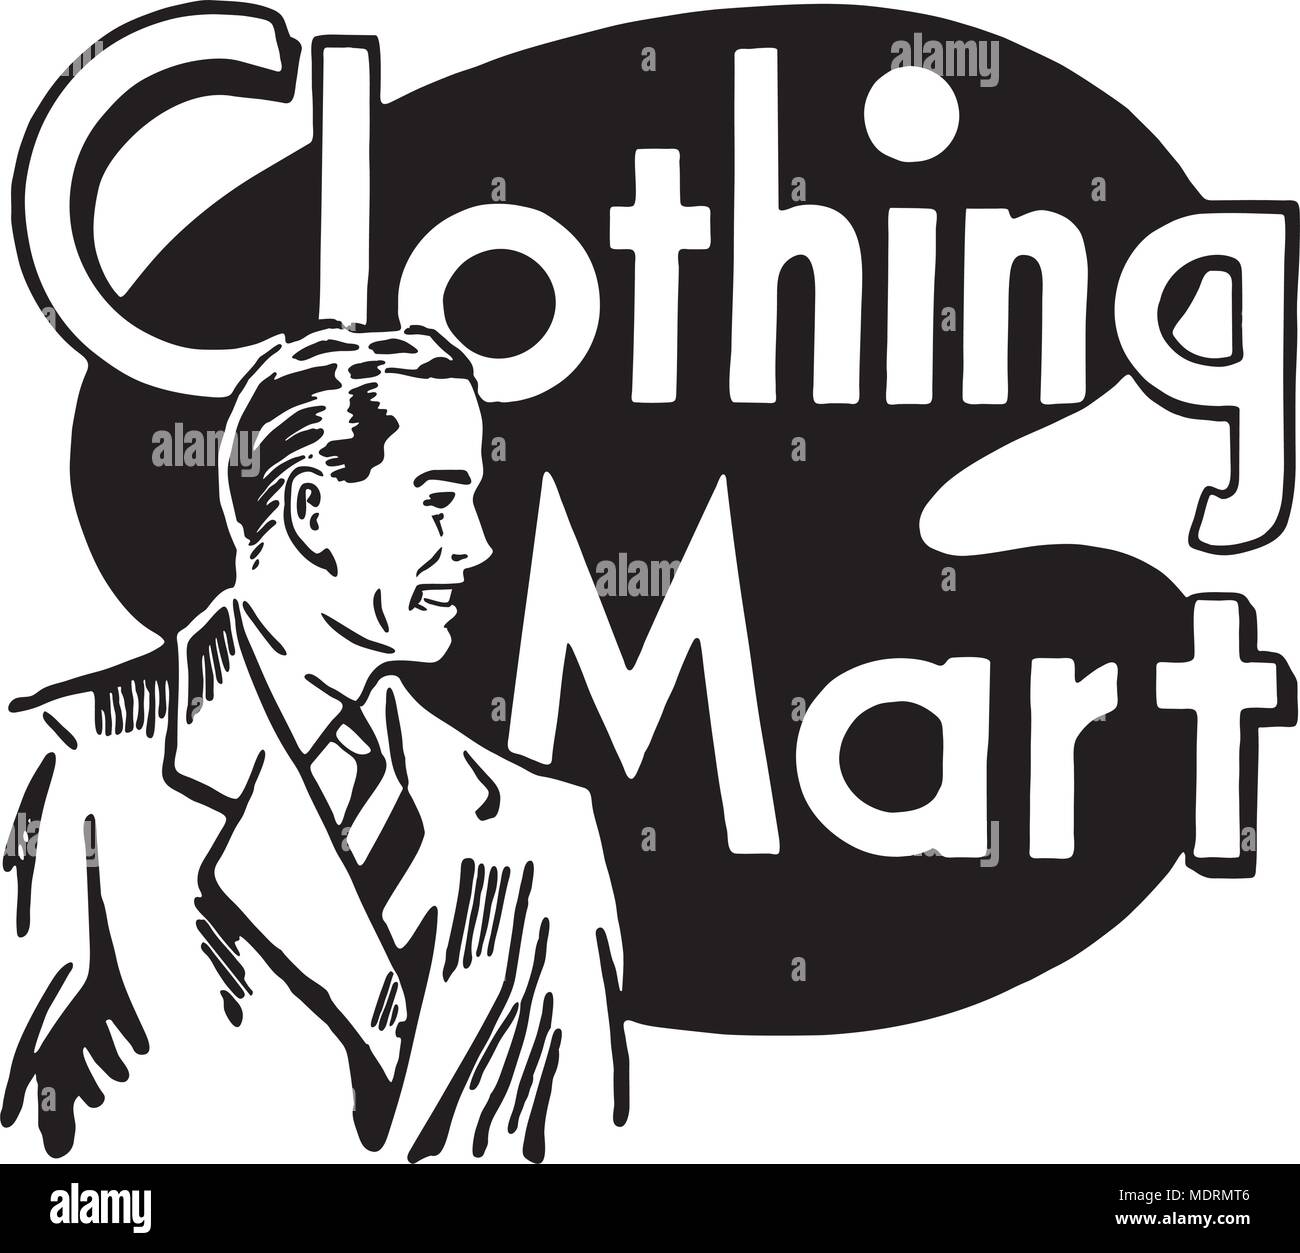 Clothing Mart - Retro Ad Art Banner Stock Vector